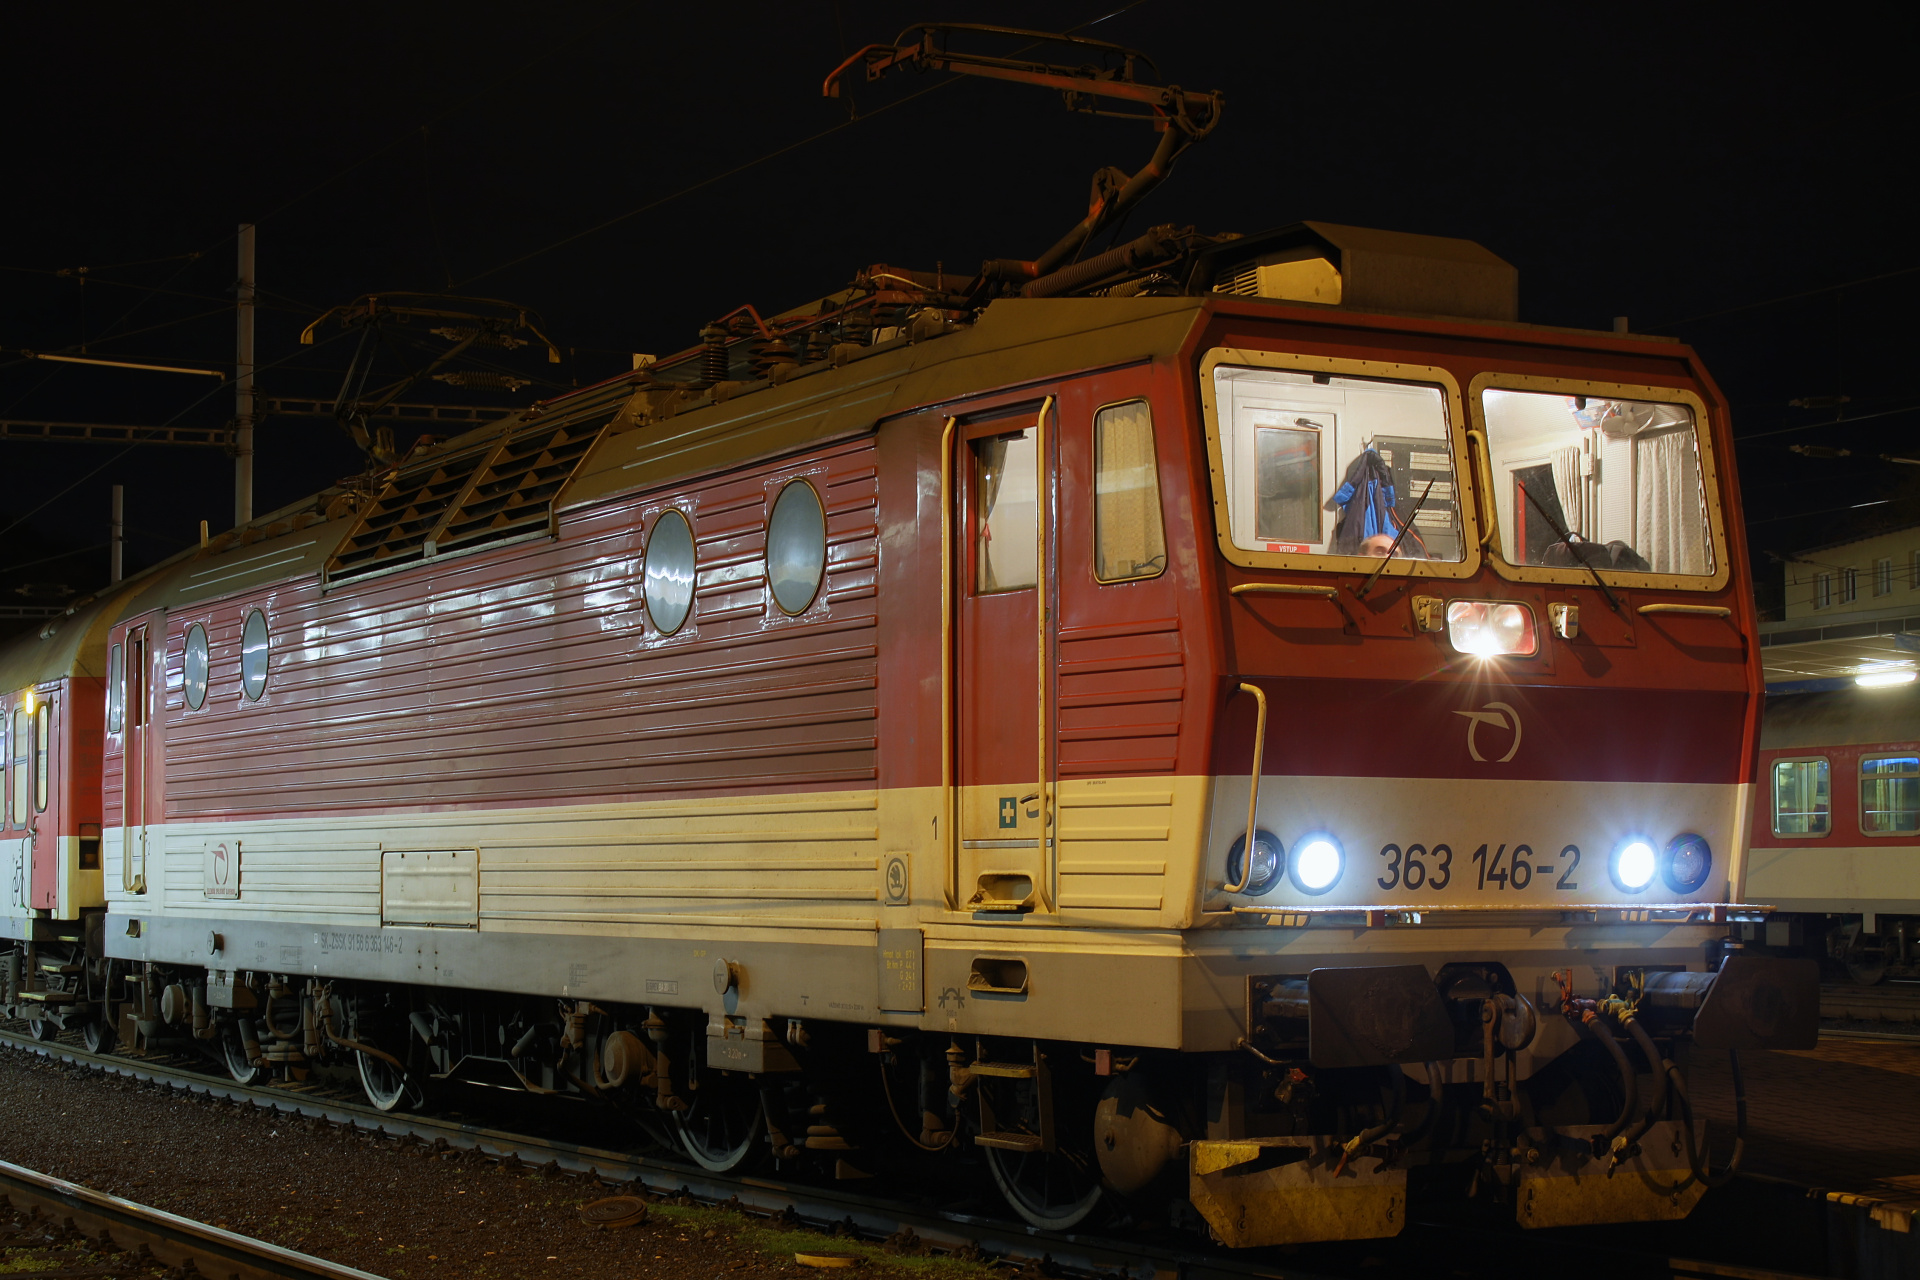 Škoda 69E 363 146-2 (Travels » Bratislava » Vehicles » Trains and Locomotives)